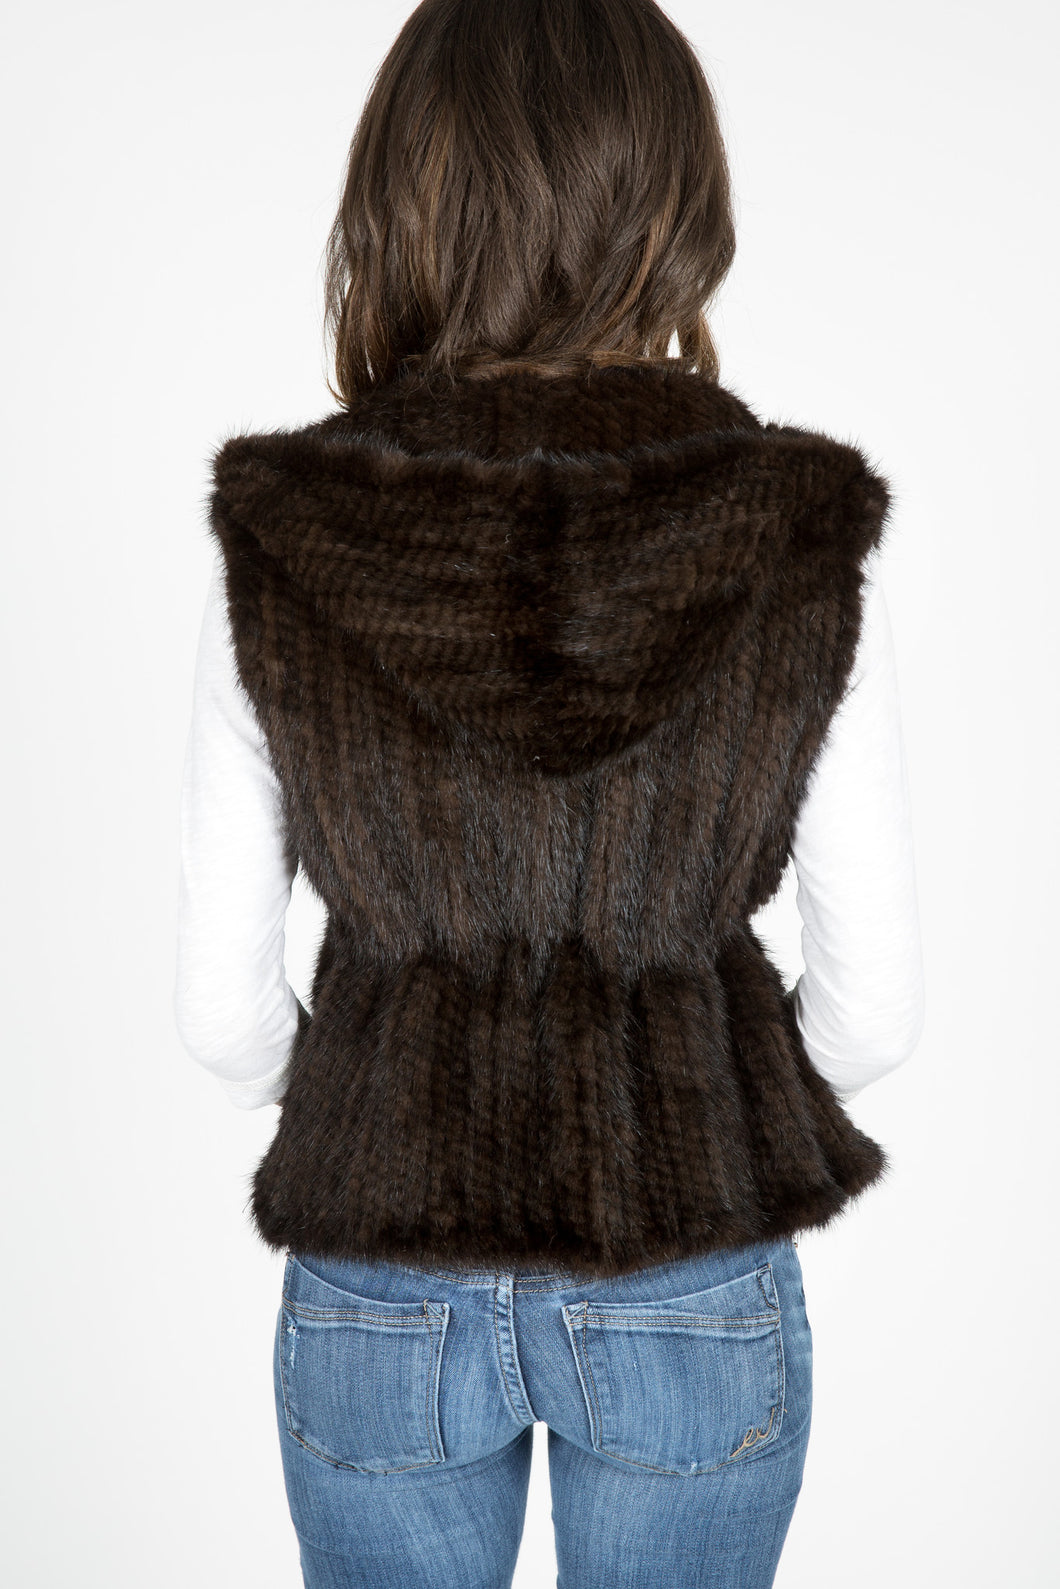 Knitted Mink Fur Vest with Hood (Denmark)